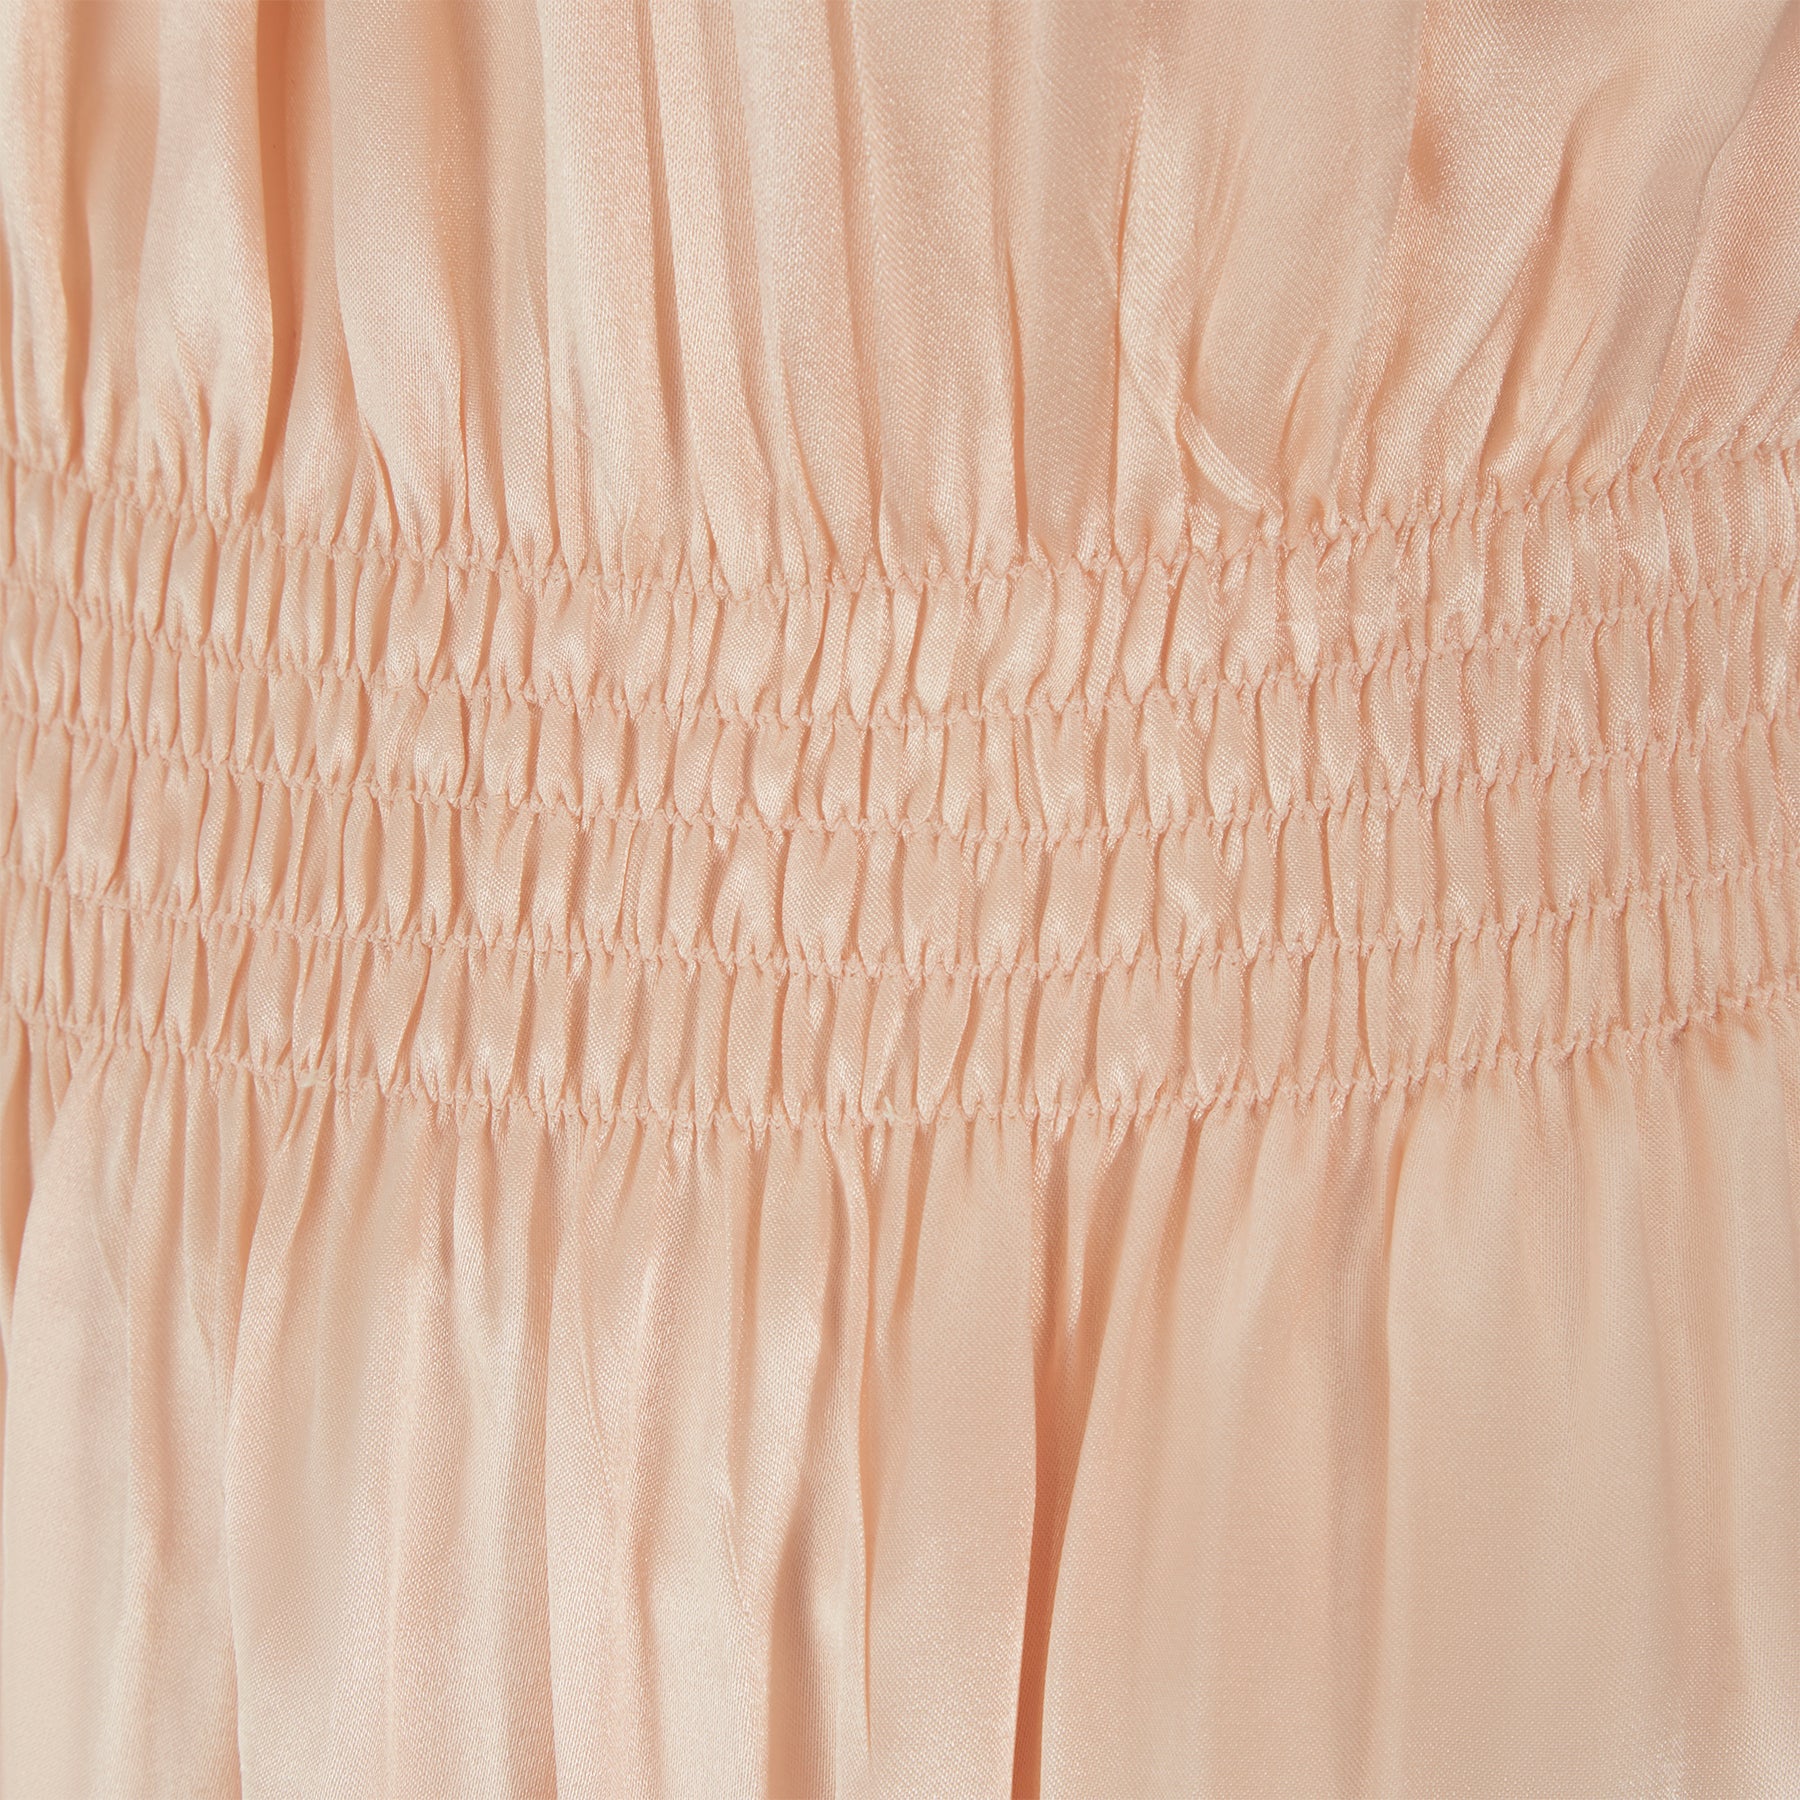 1940s CC41 Labelled Peach Satin Slip Dress